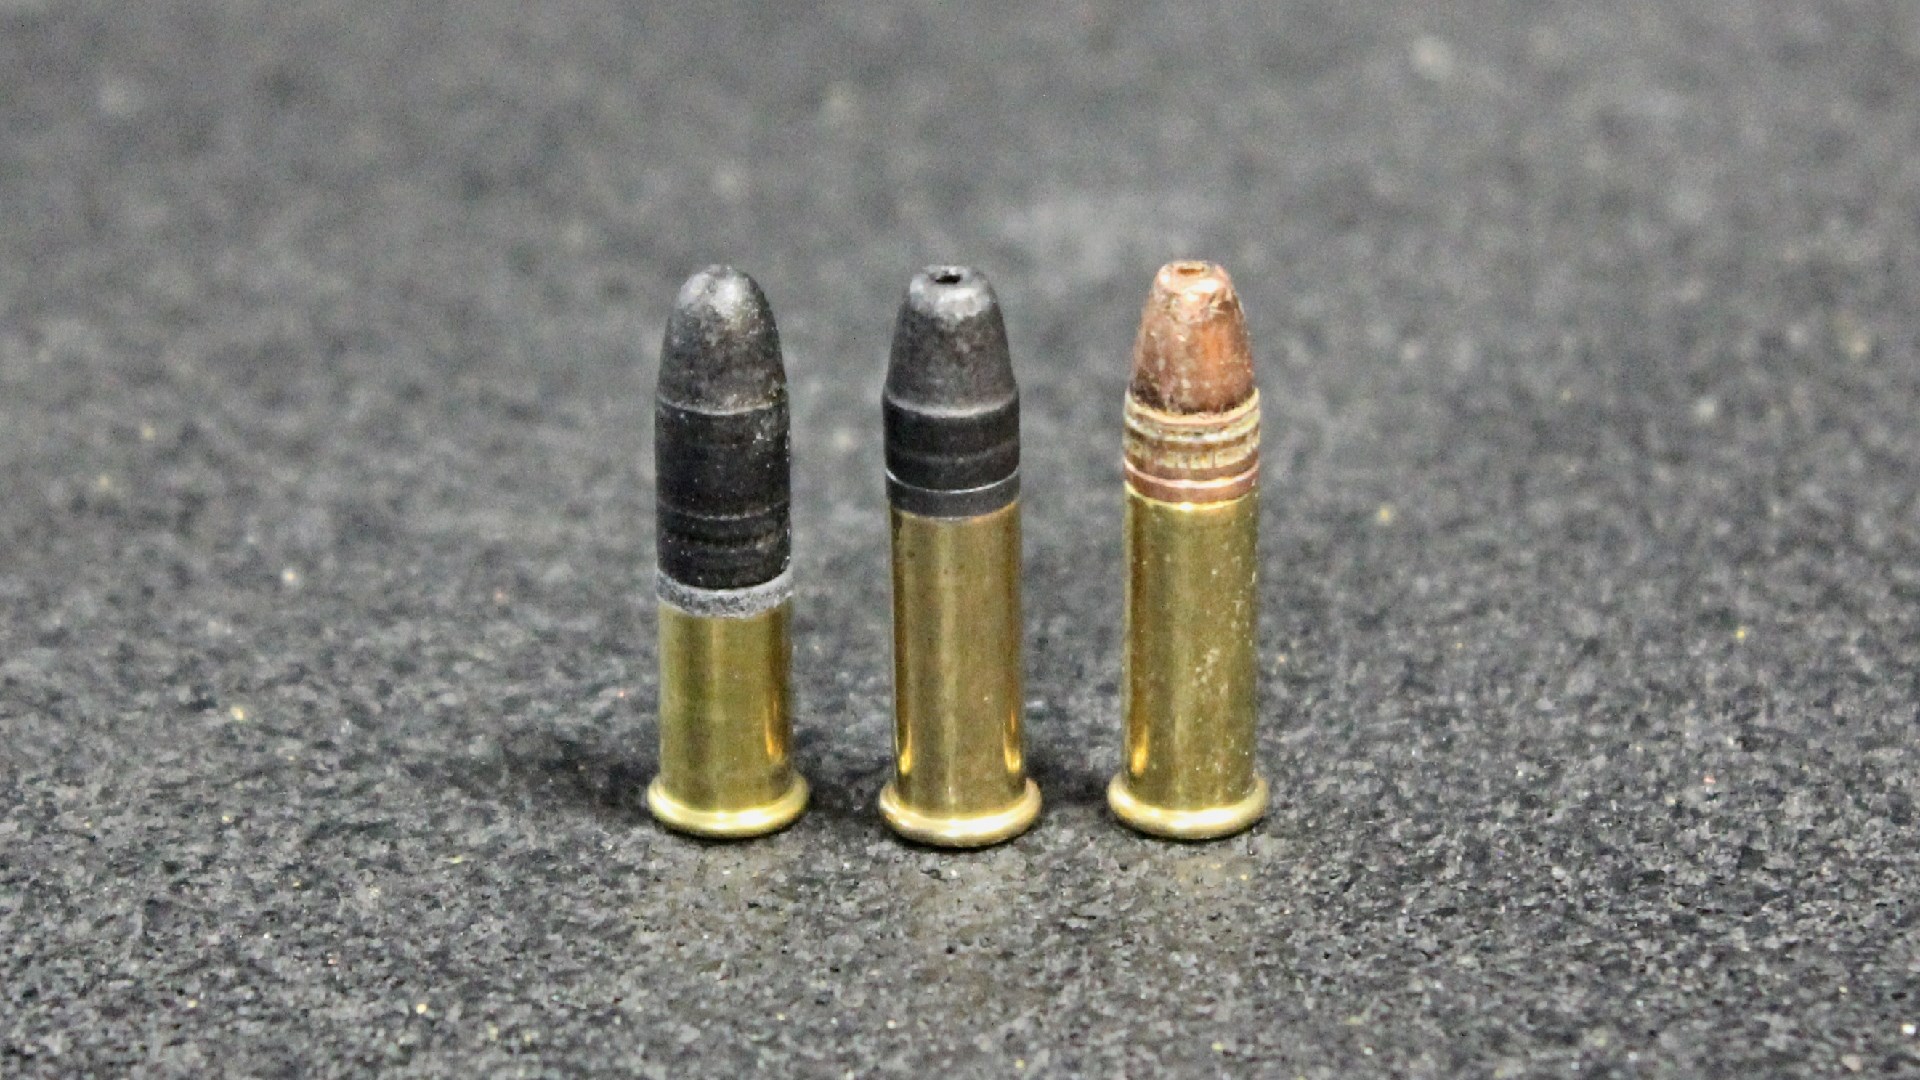 .22 Long Rifle rimfire ammunition cartridges